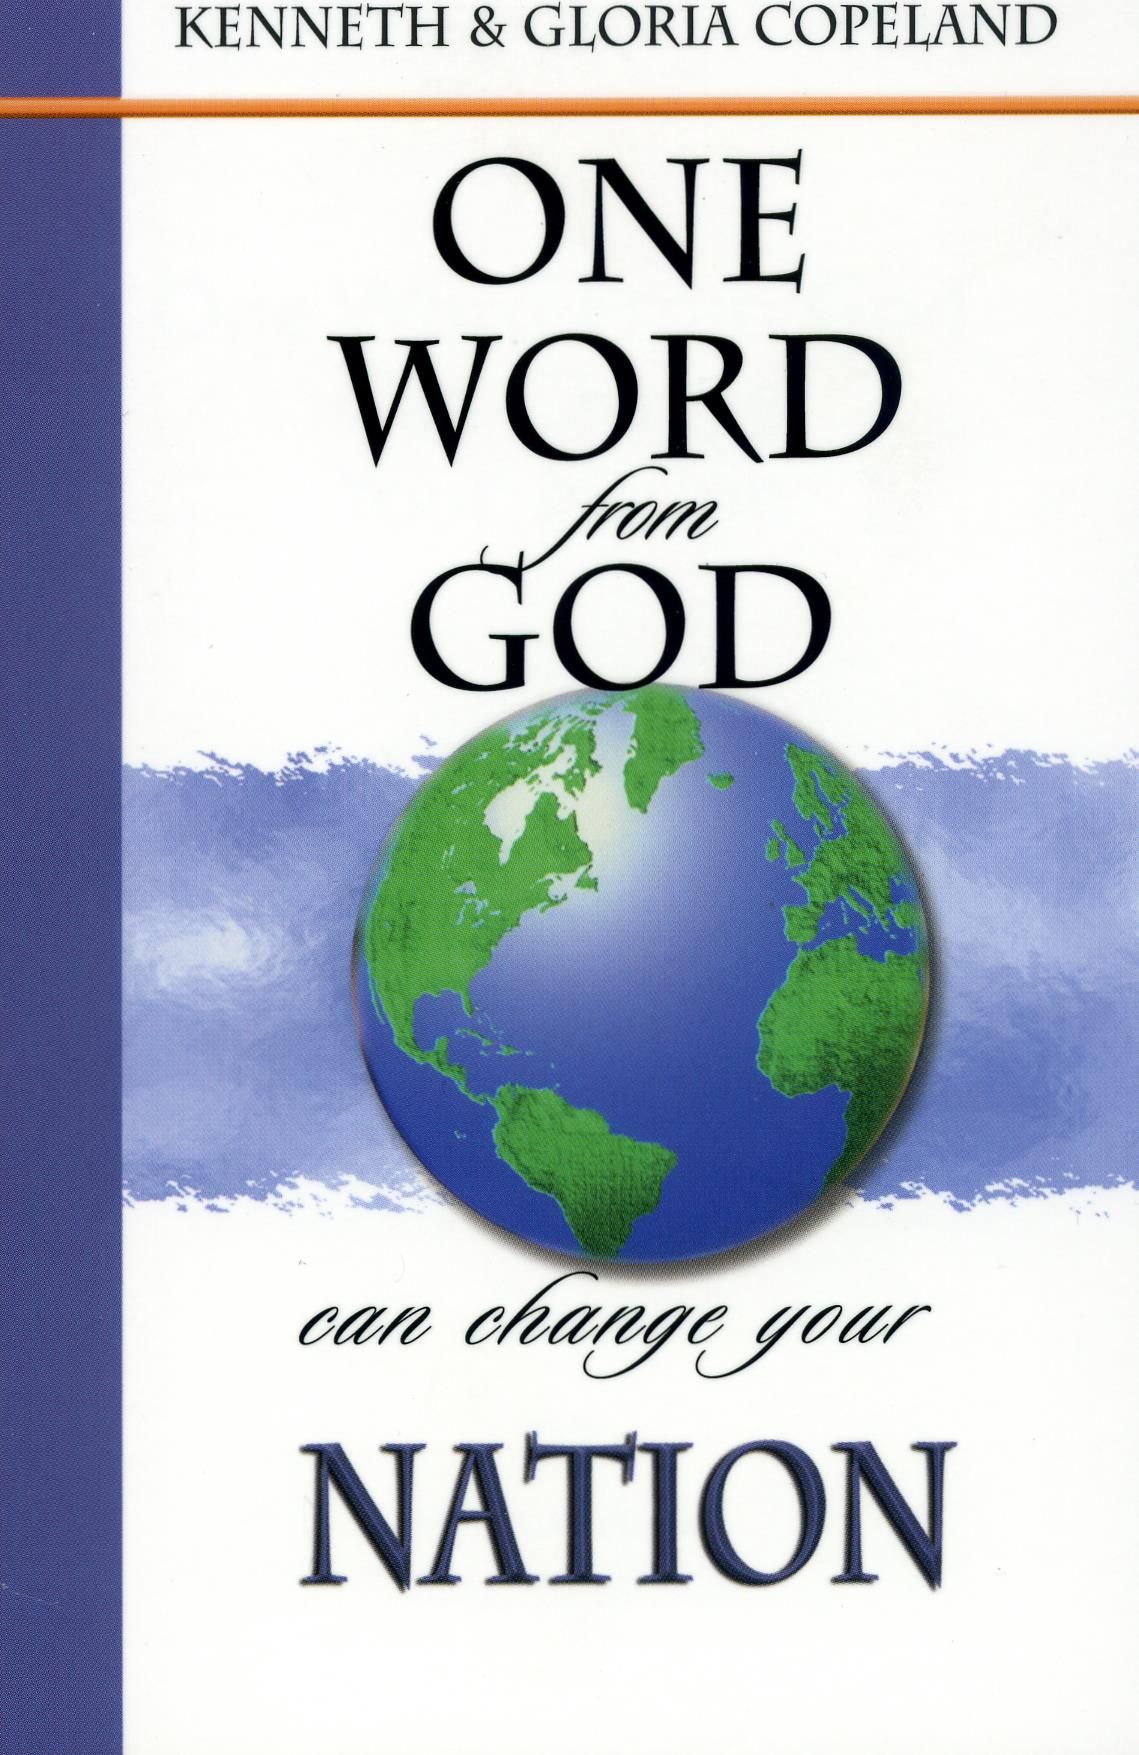 Englische Bücher - K. & G. Copeland: One Word from God can change your Nation